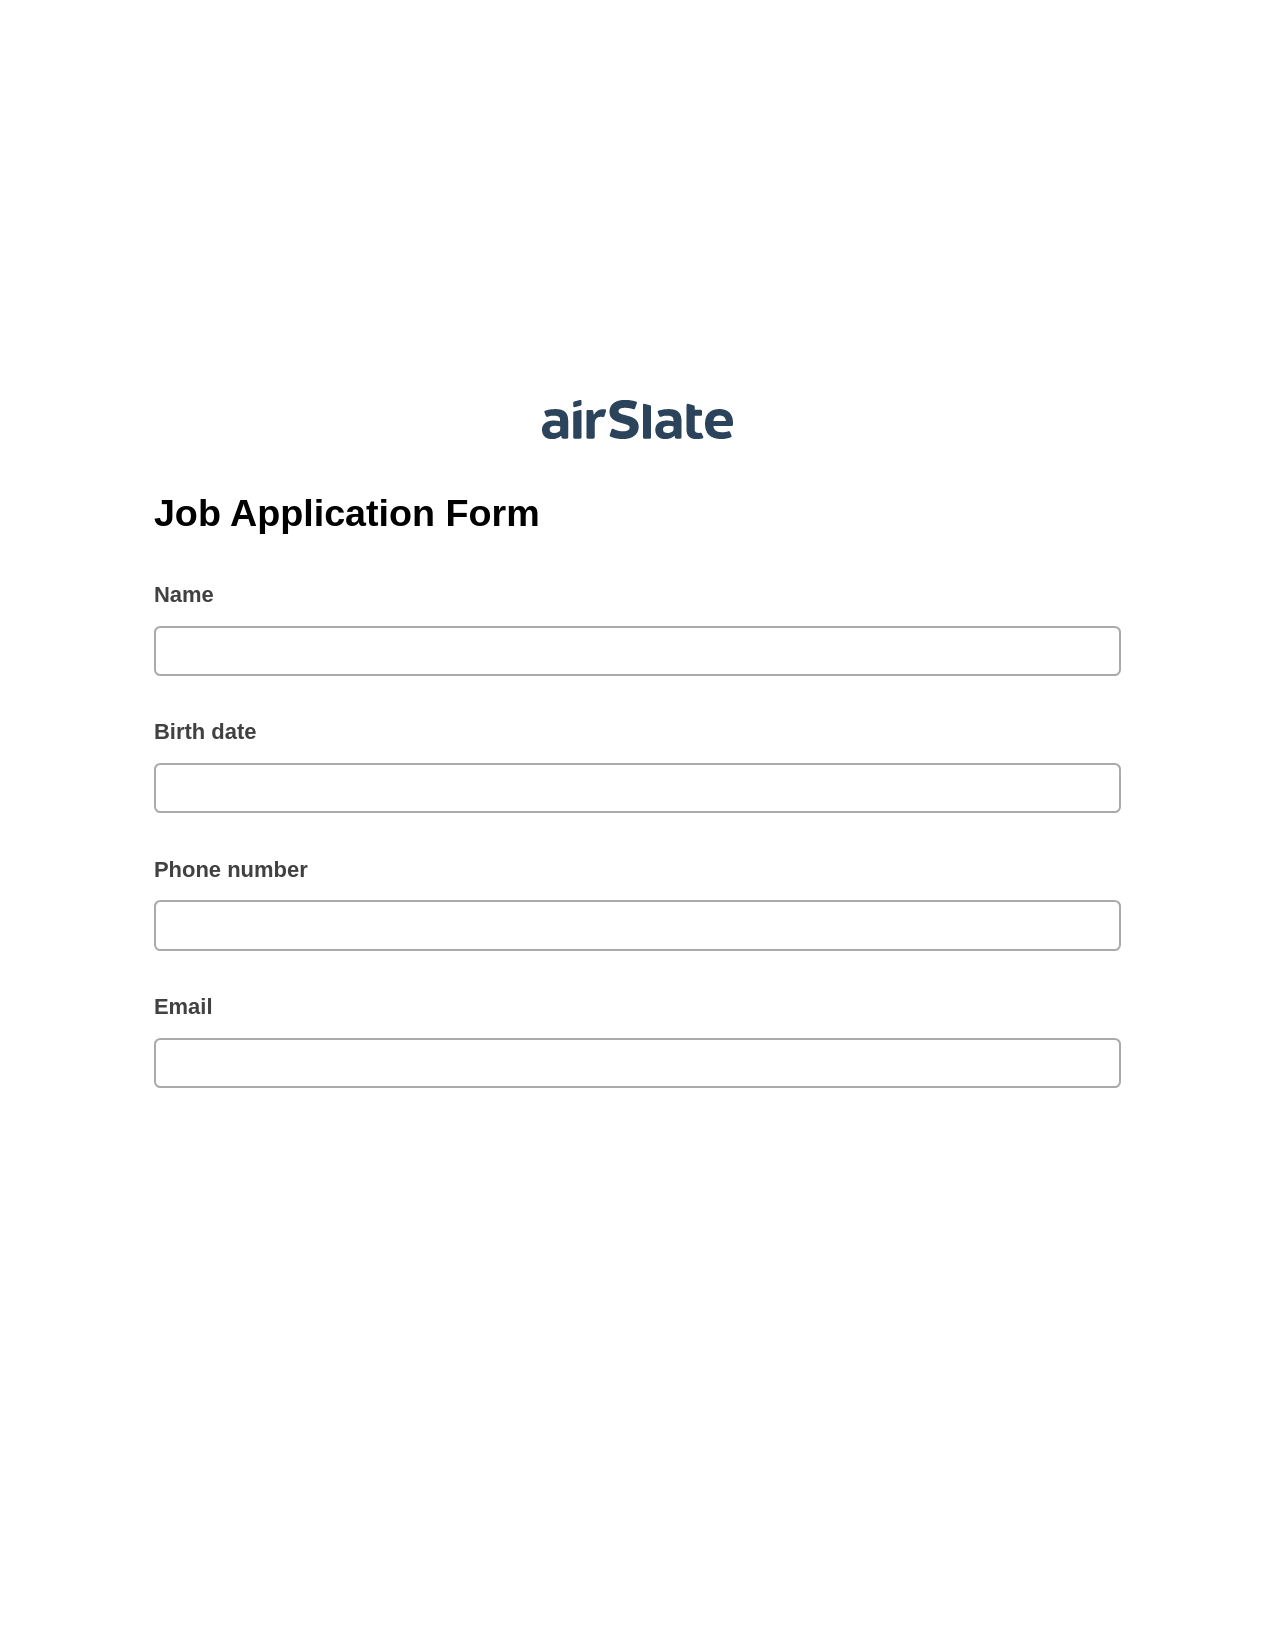 Job Application Form Pre-fill from Google Sheets Bot, Slack Notification Bot, Export to Salesforce Bot